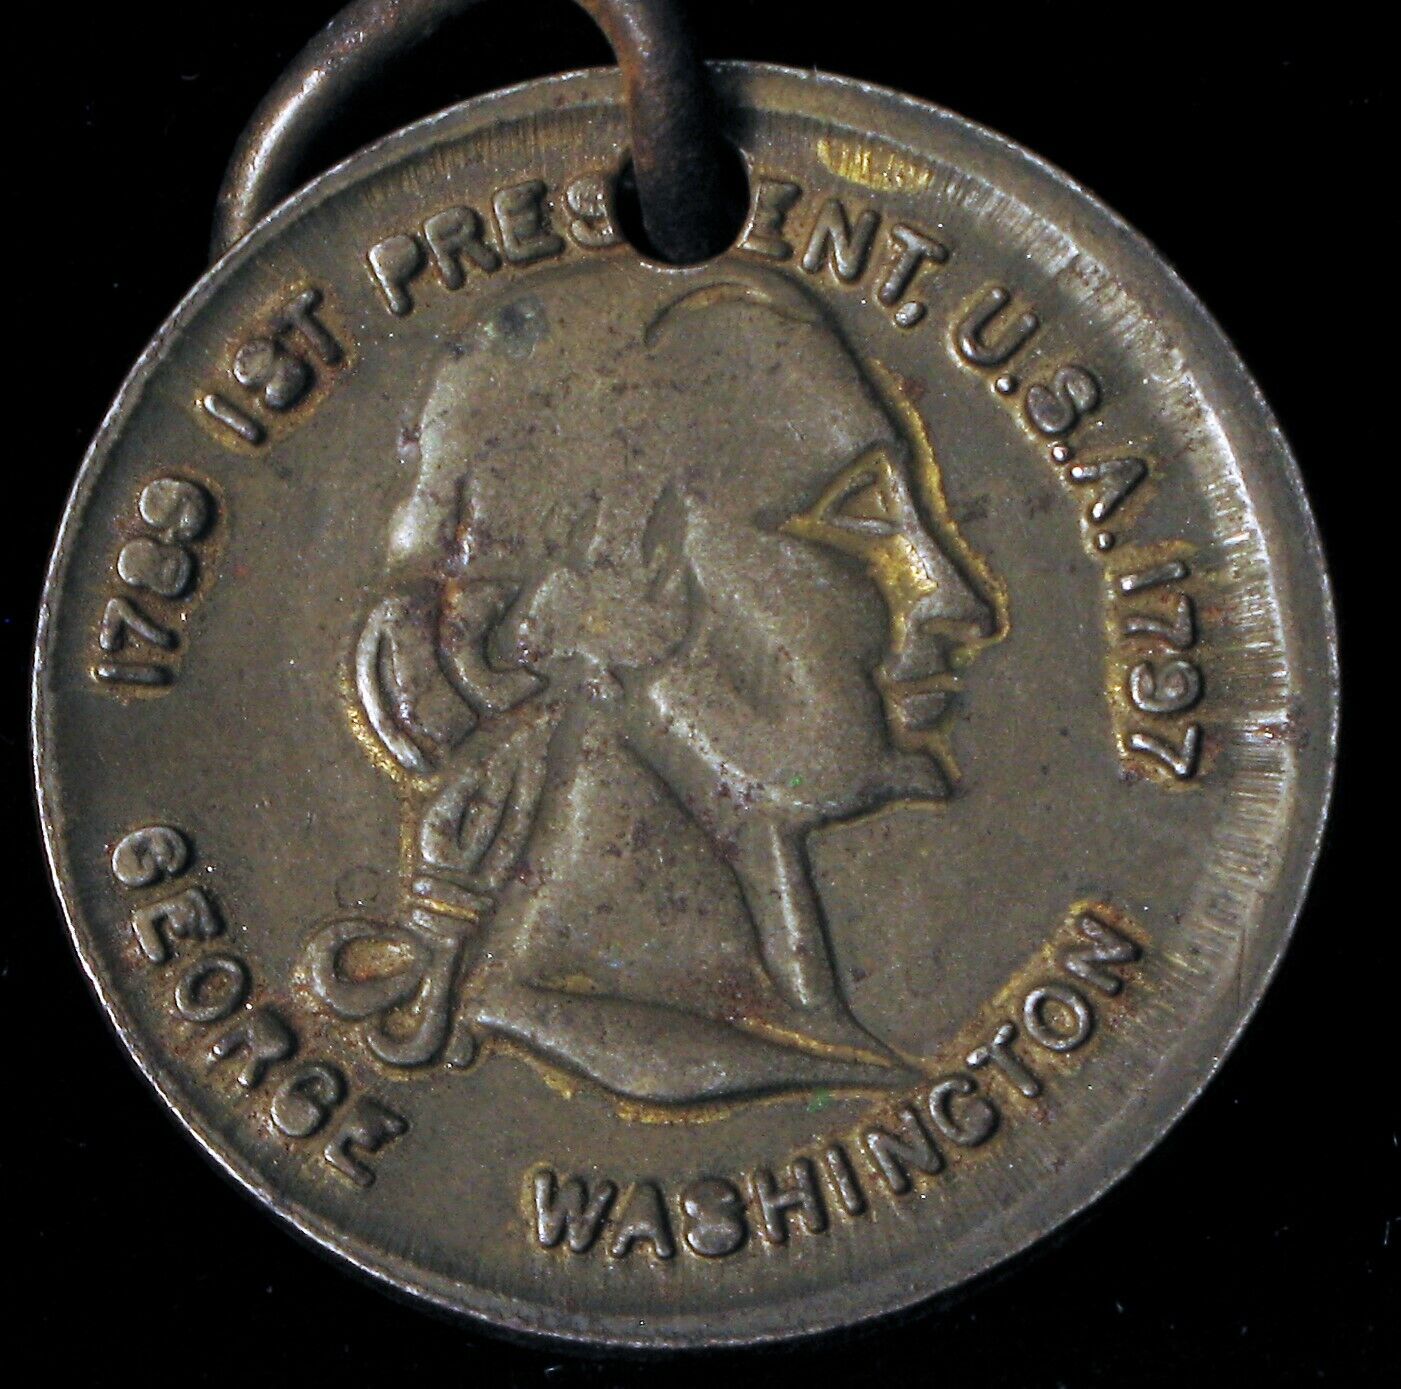 ANTIQUE GEORGE WASHINGTON DOUBLE SIDED KEY FOB 1ST PRESIDENT USA 1789 1797 OLD 